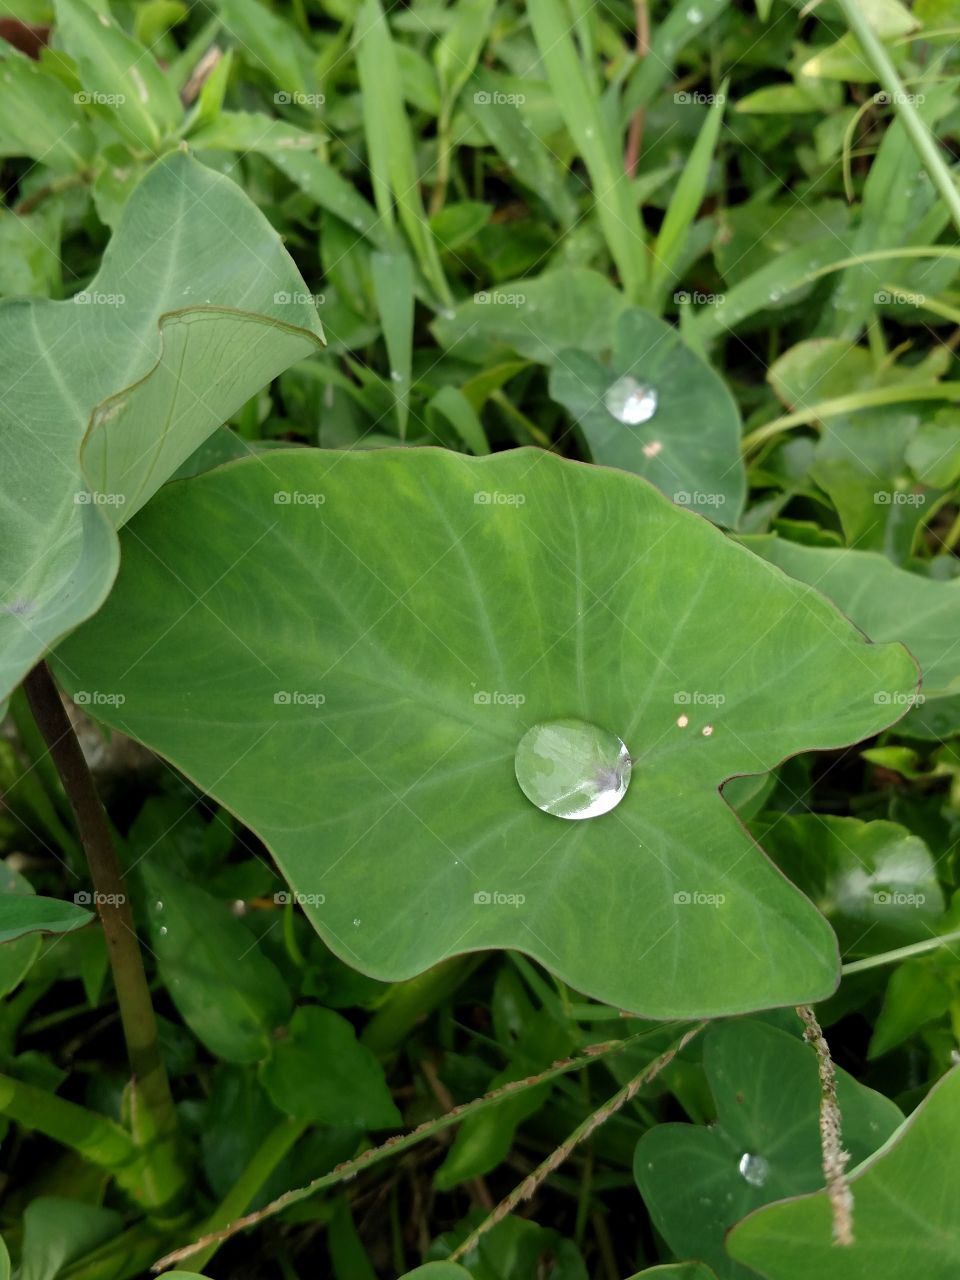 Plants holding drops of rain